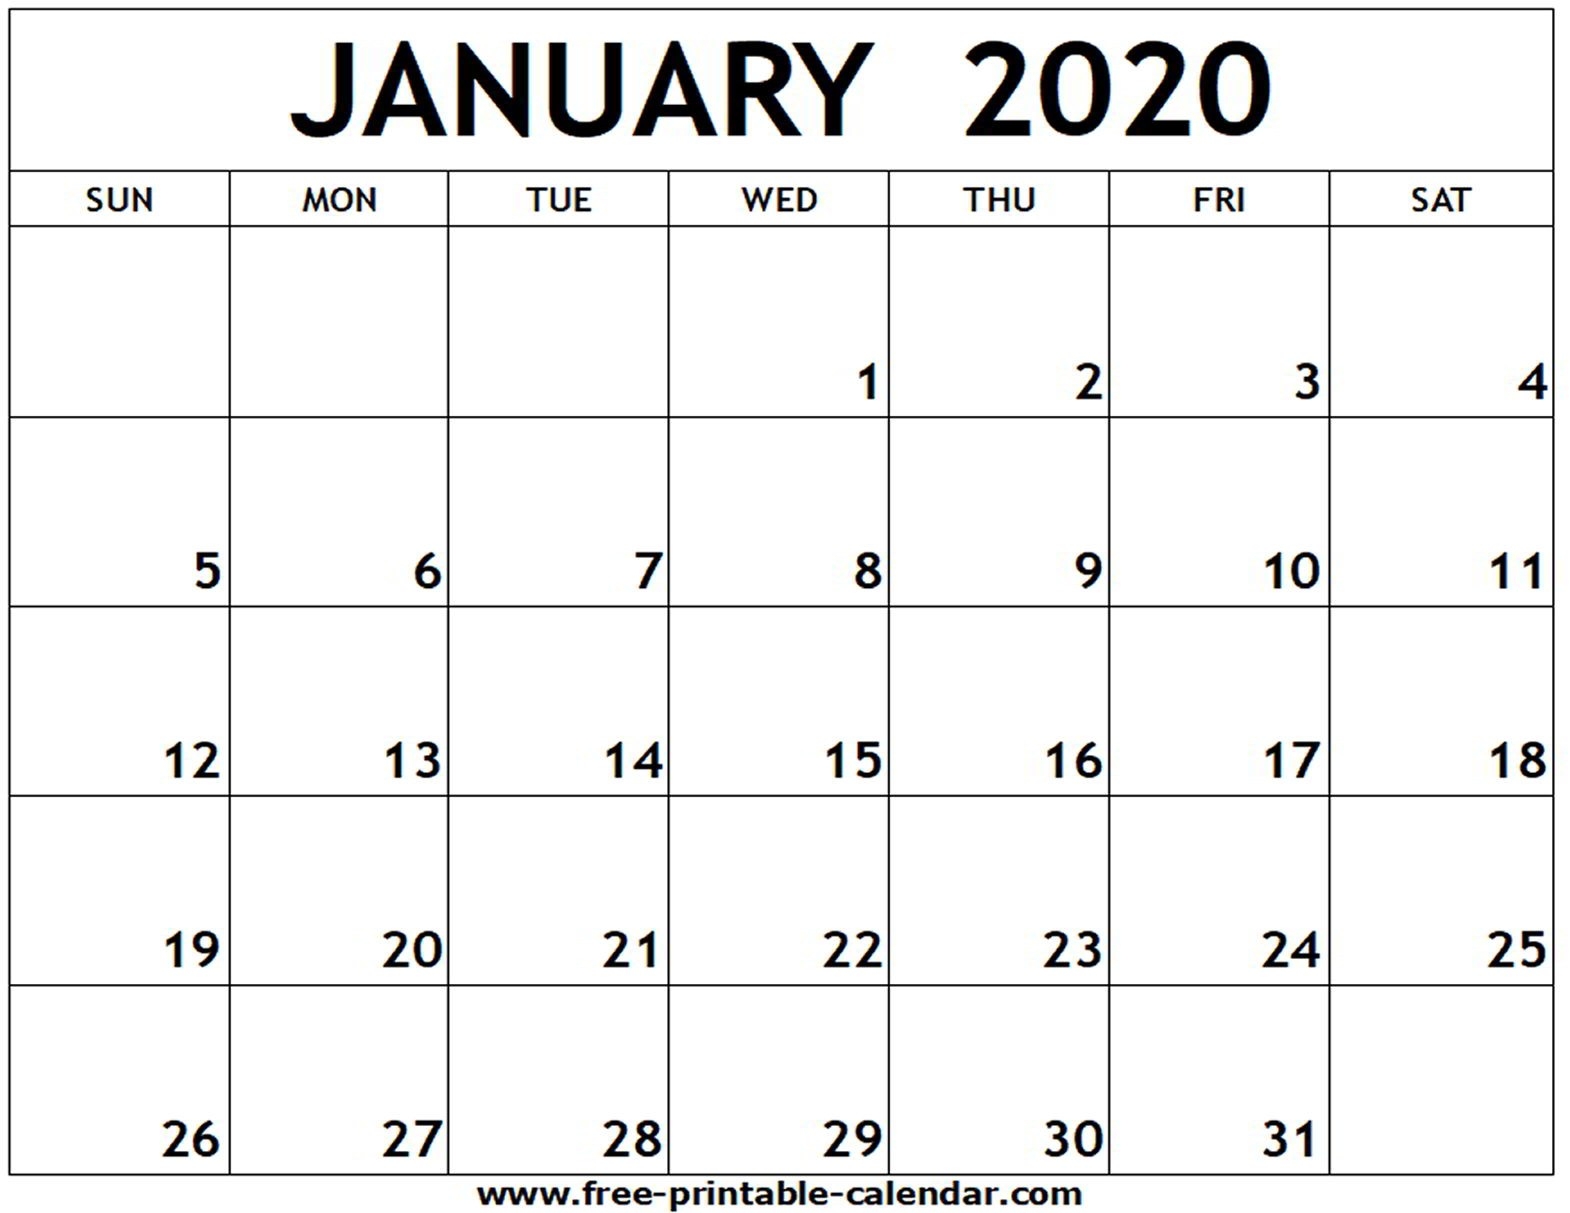 January 2020 Printable Calendar - Free-Printable-Calendar-January 2020 Calendar Blank